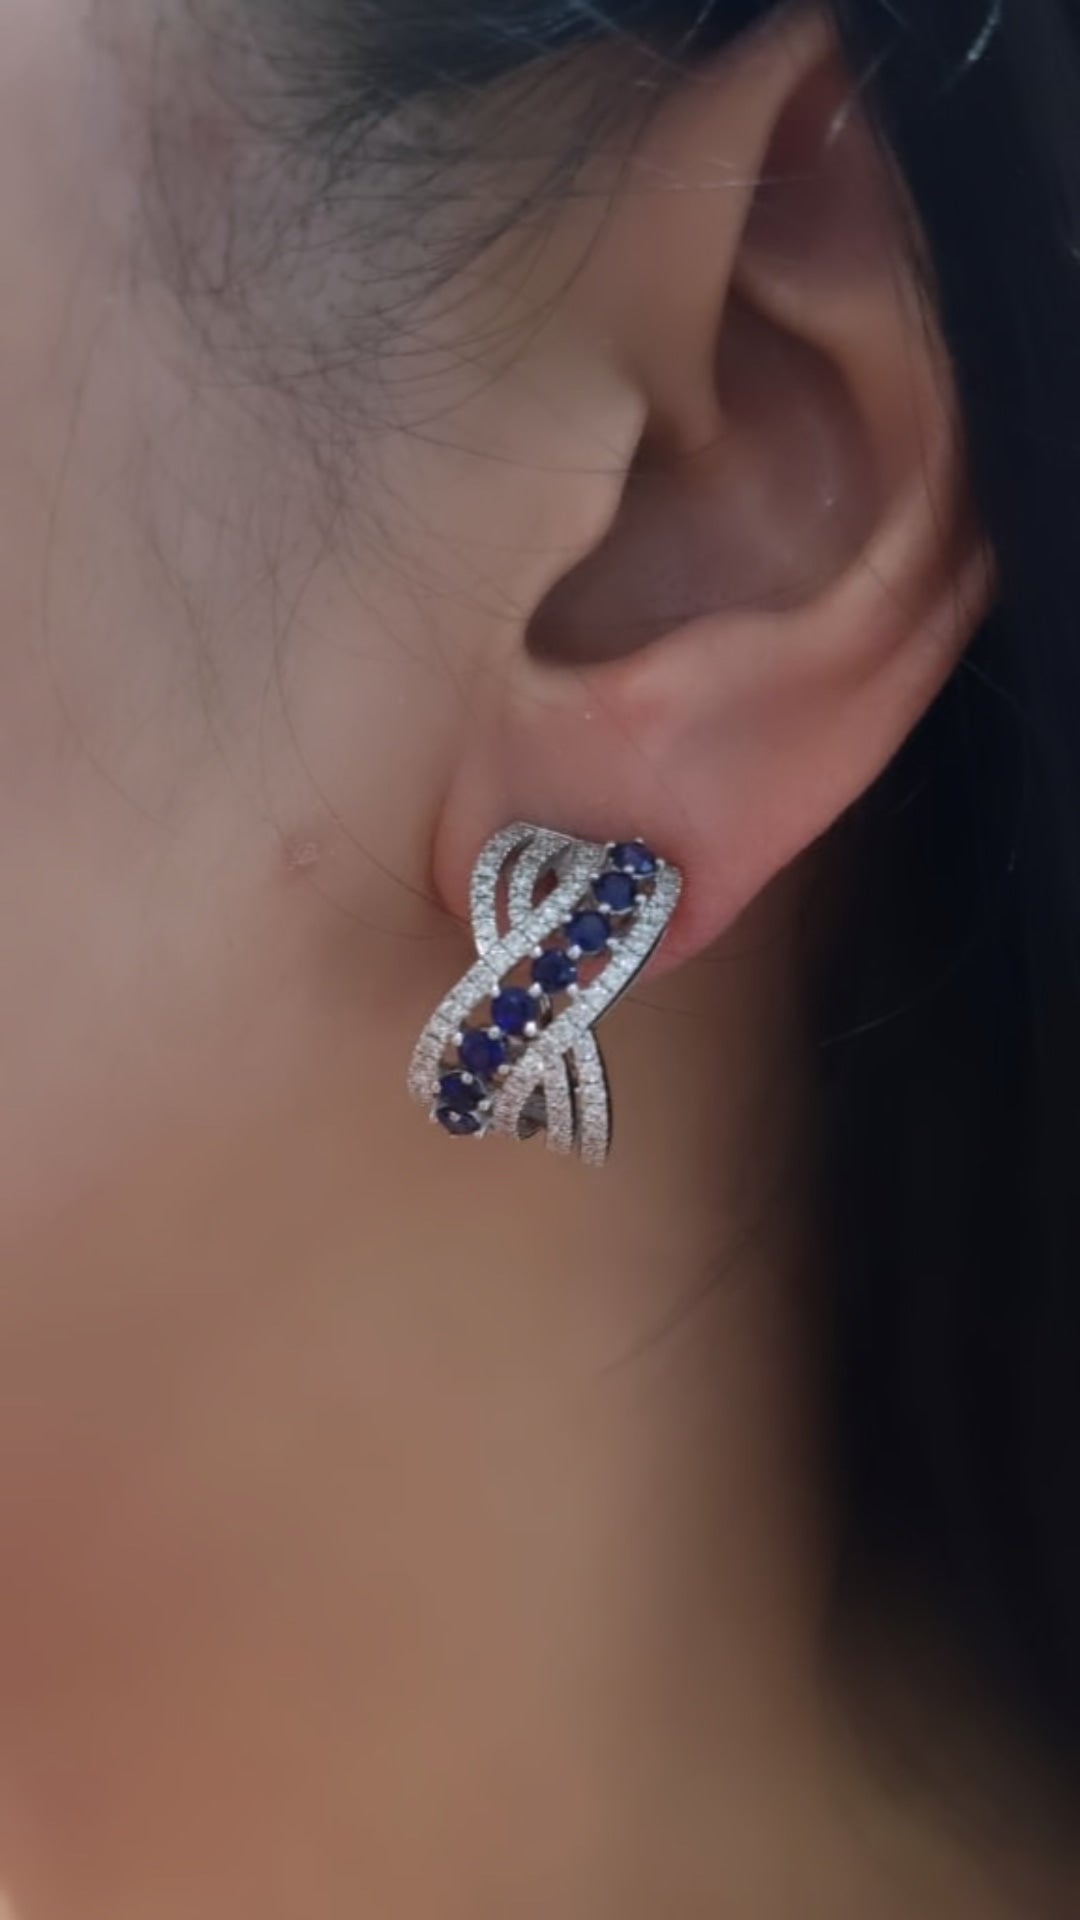 Blue Sapphire And Diamond Huggie Hoop Earrings In 18k White Gold.